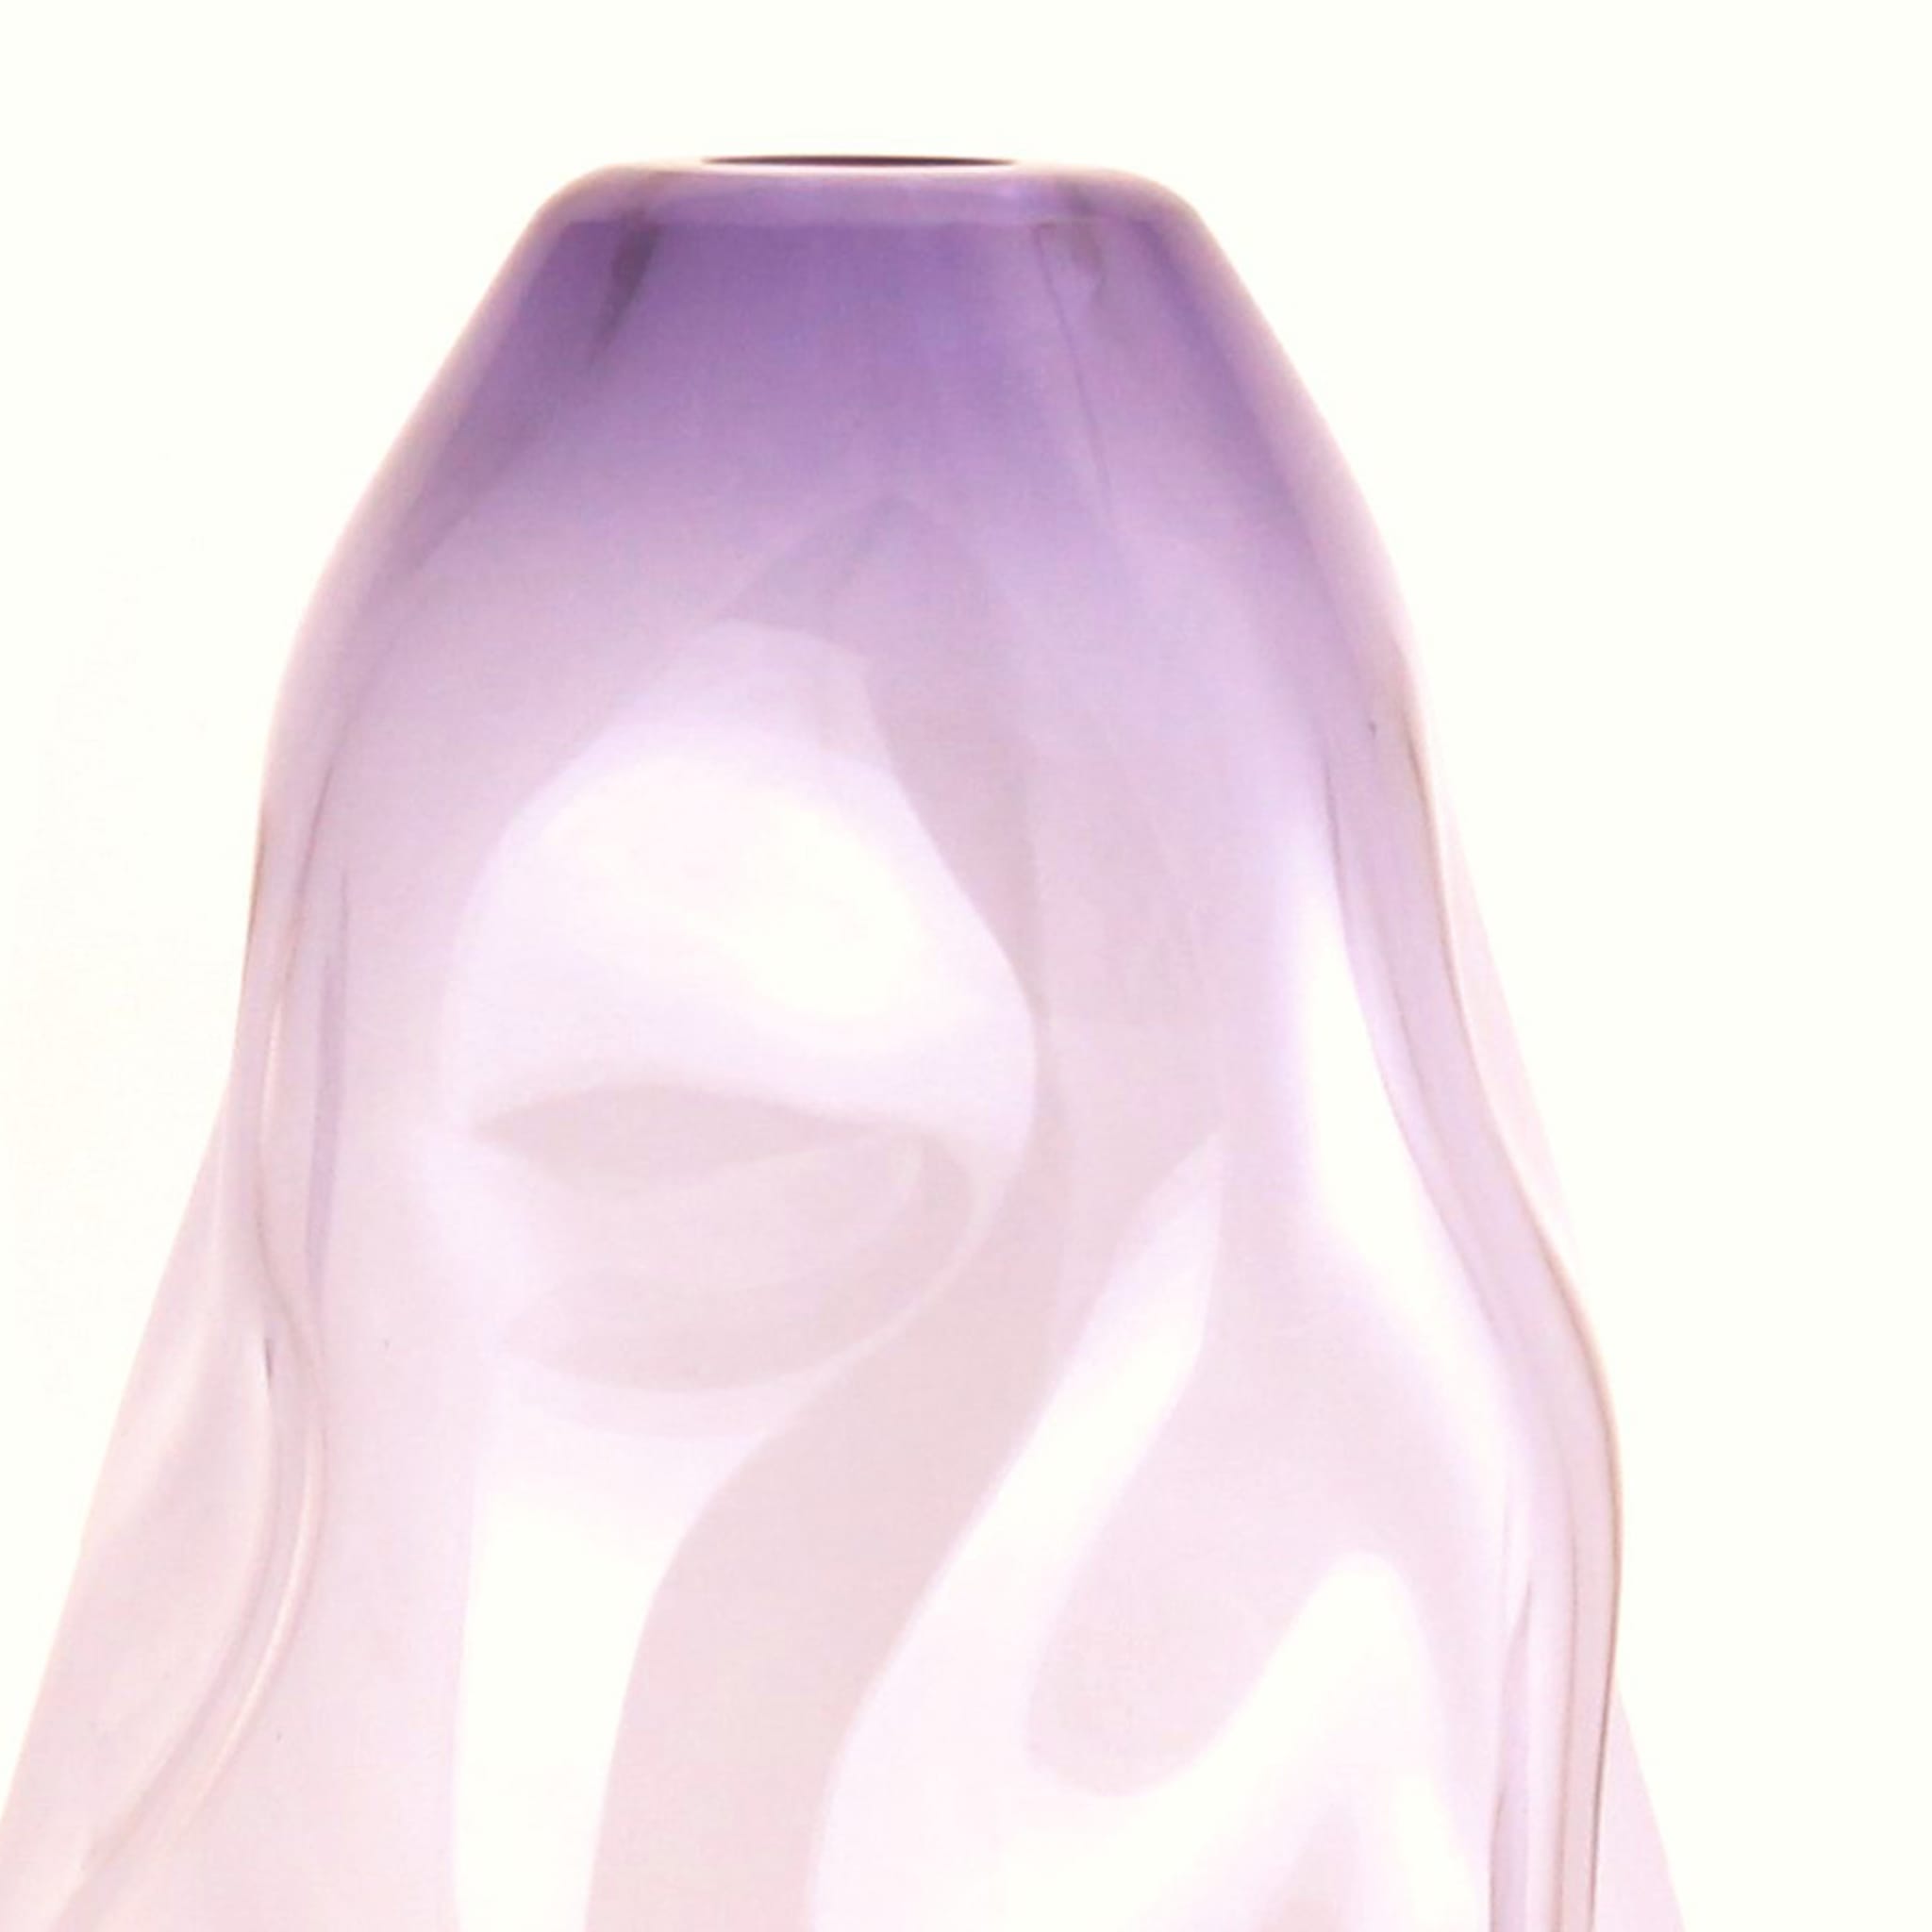 Rioterà Medium Lilac Soffione Vase - Alternative view 1